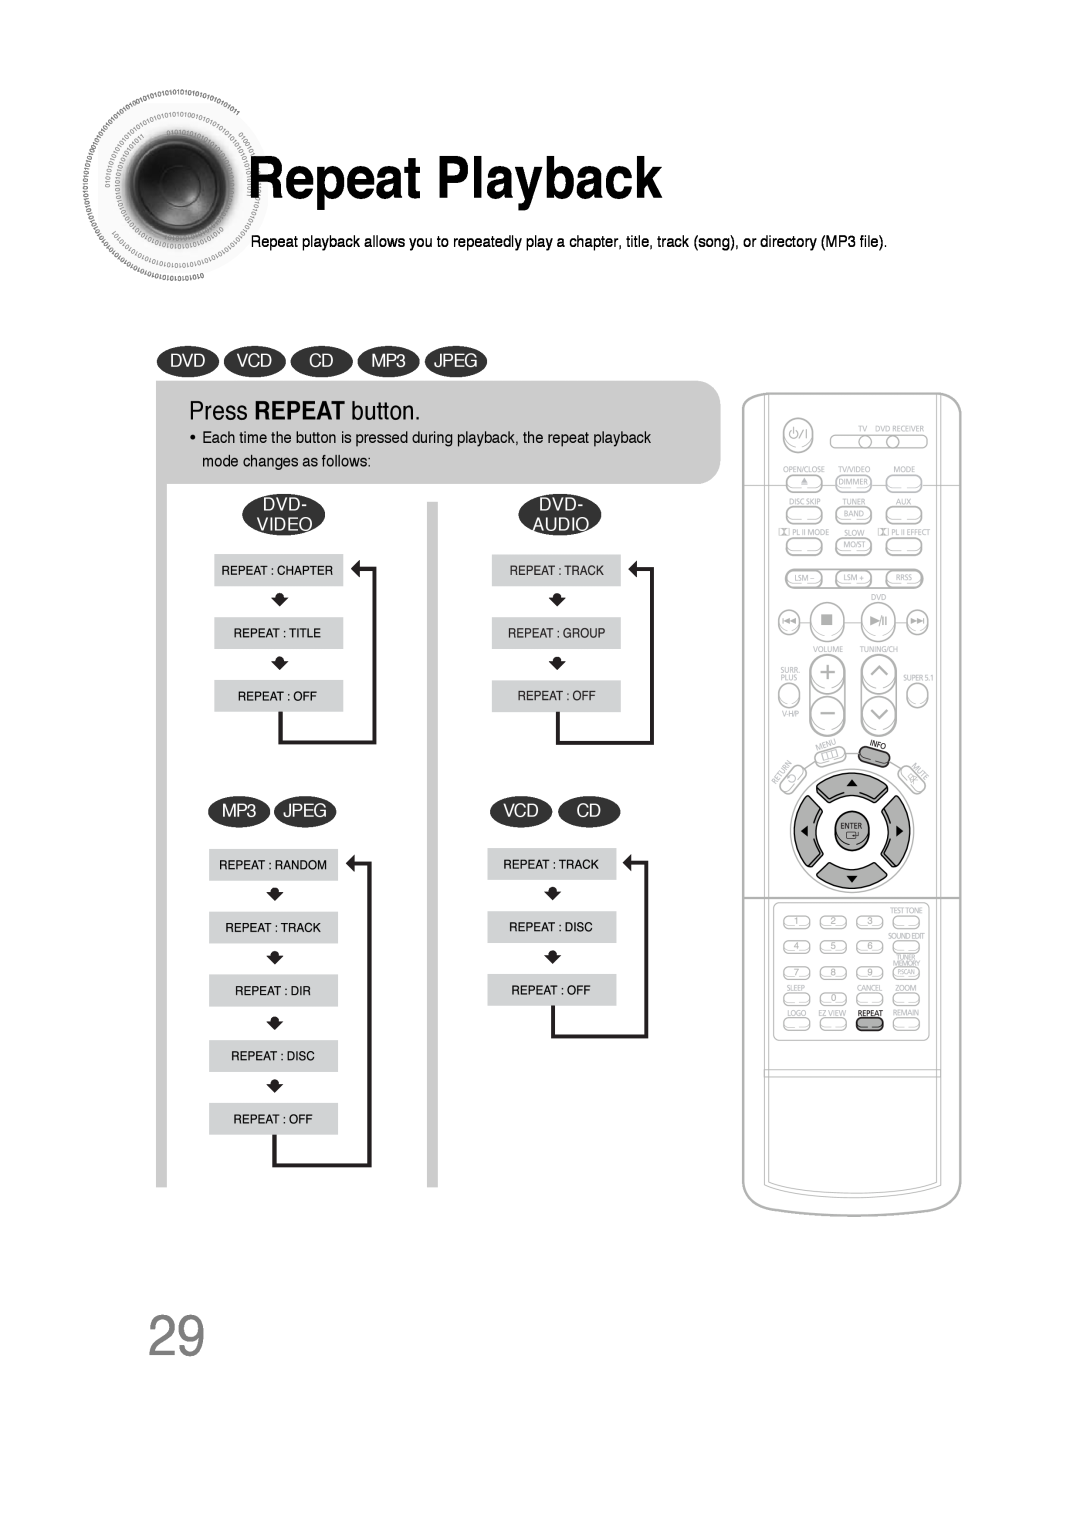 Samsung 20051111103302296 instruction manual RepeatPlayback, Press REPEAT button, DVD VCD CD MP3 JPEG, Video, Audio, Vcd Cd 